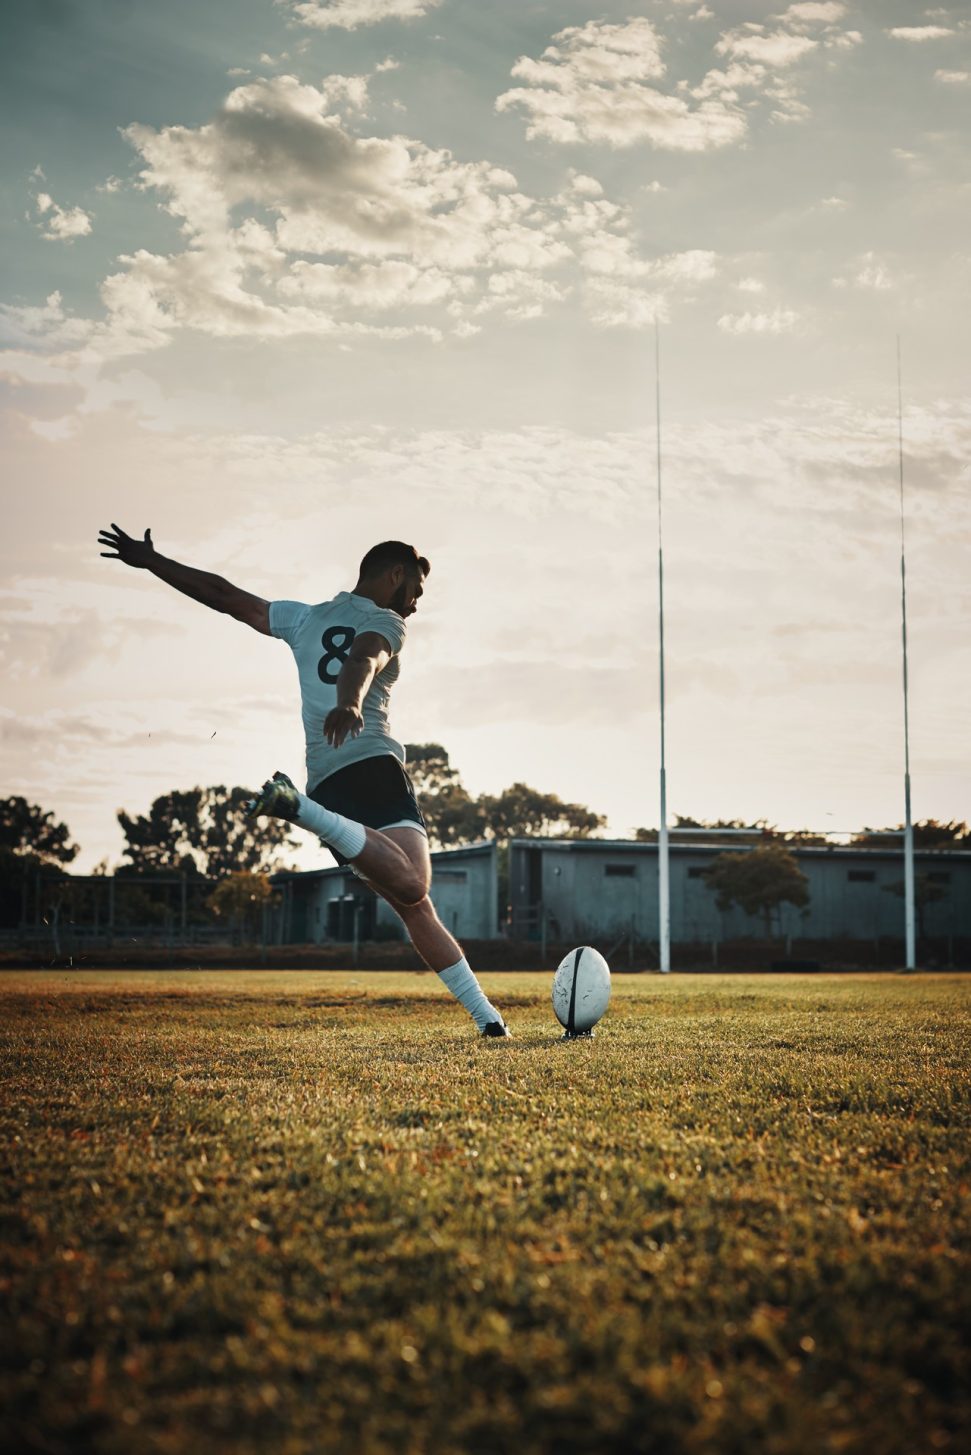 Tir d'une pénalité au rugby © PeopleImages Istock